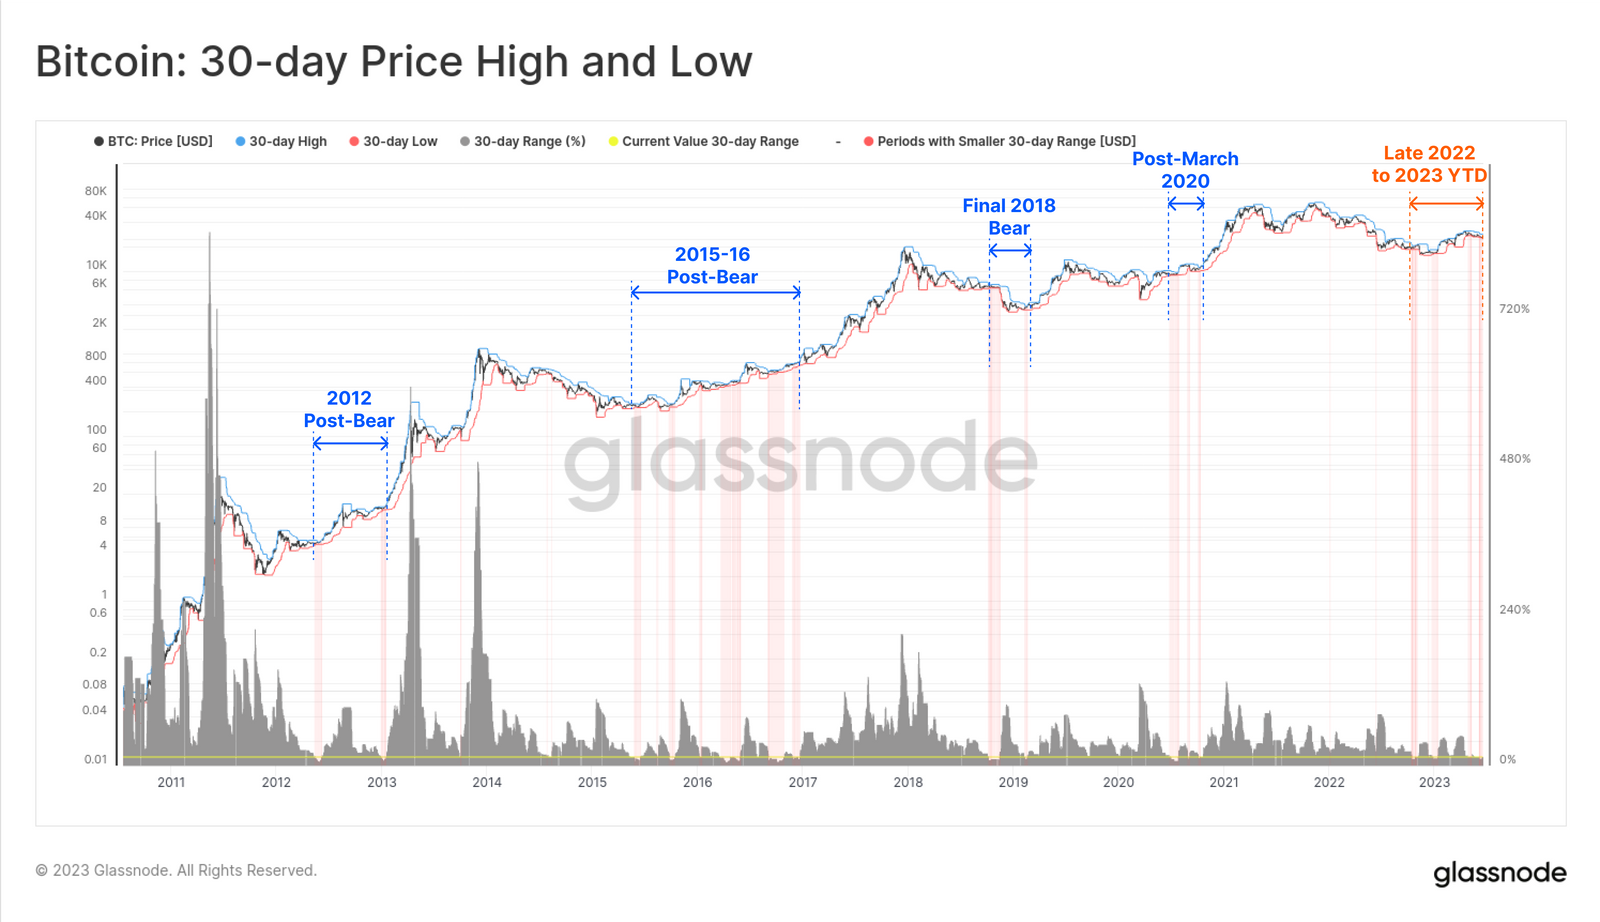 Bitcoin BTC Price Highs and Lows. Source: Glassnode